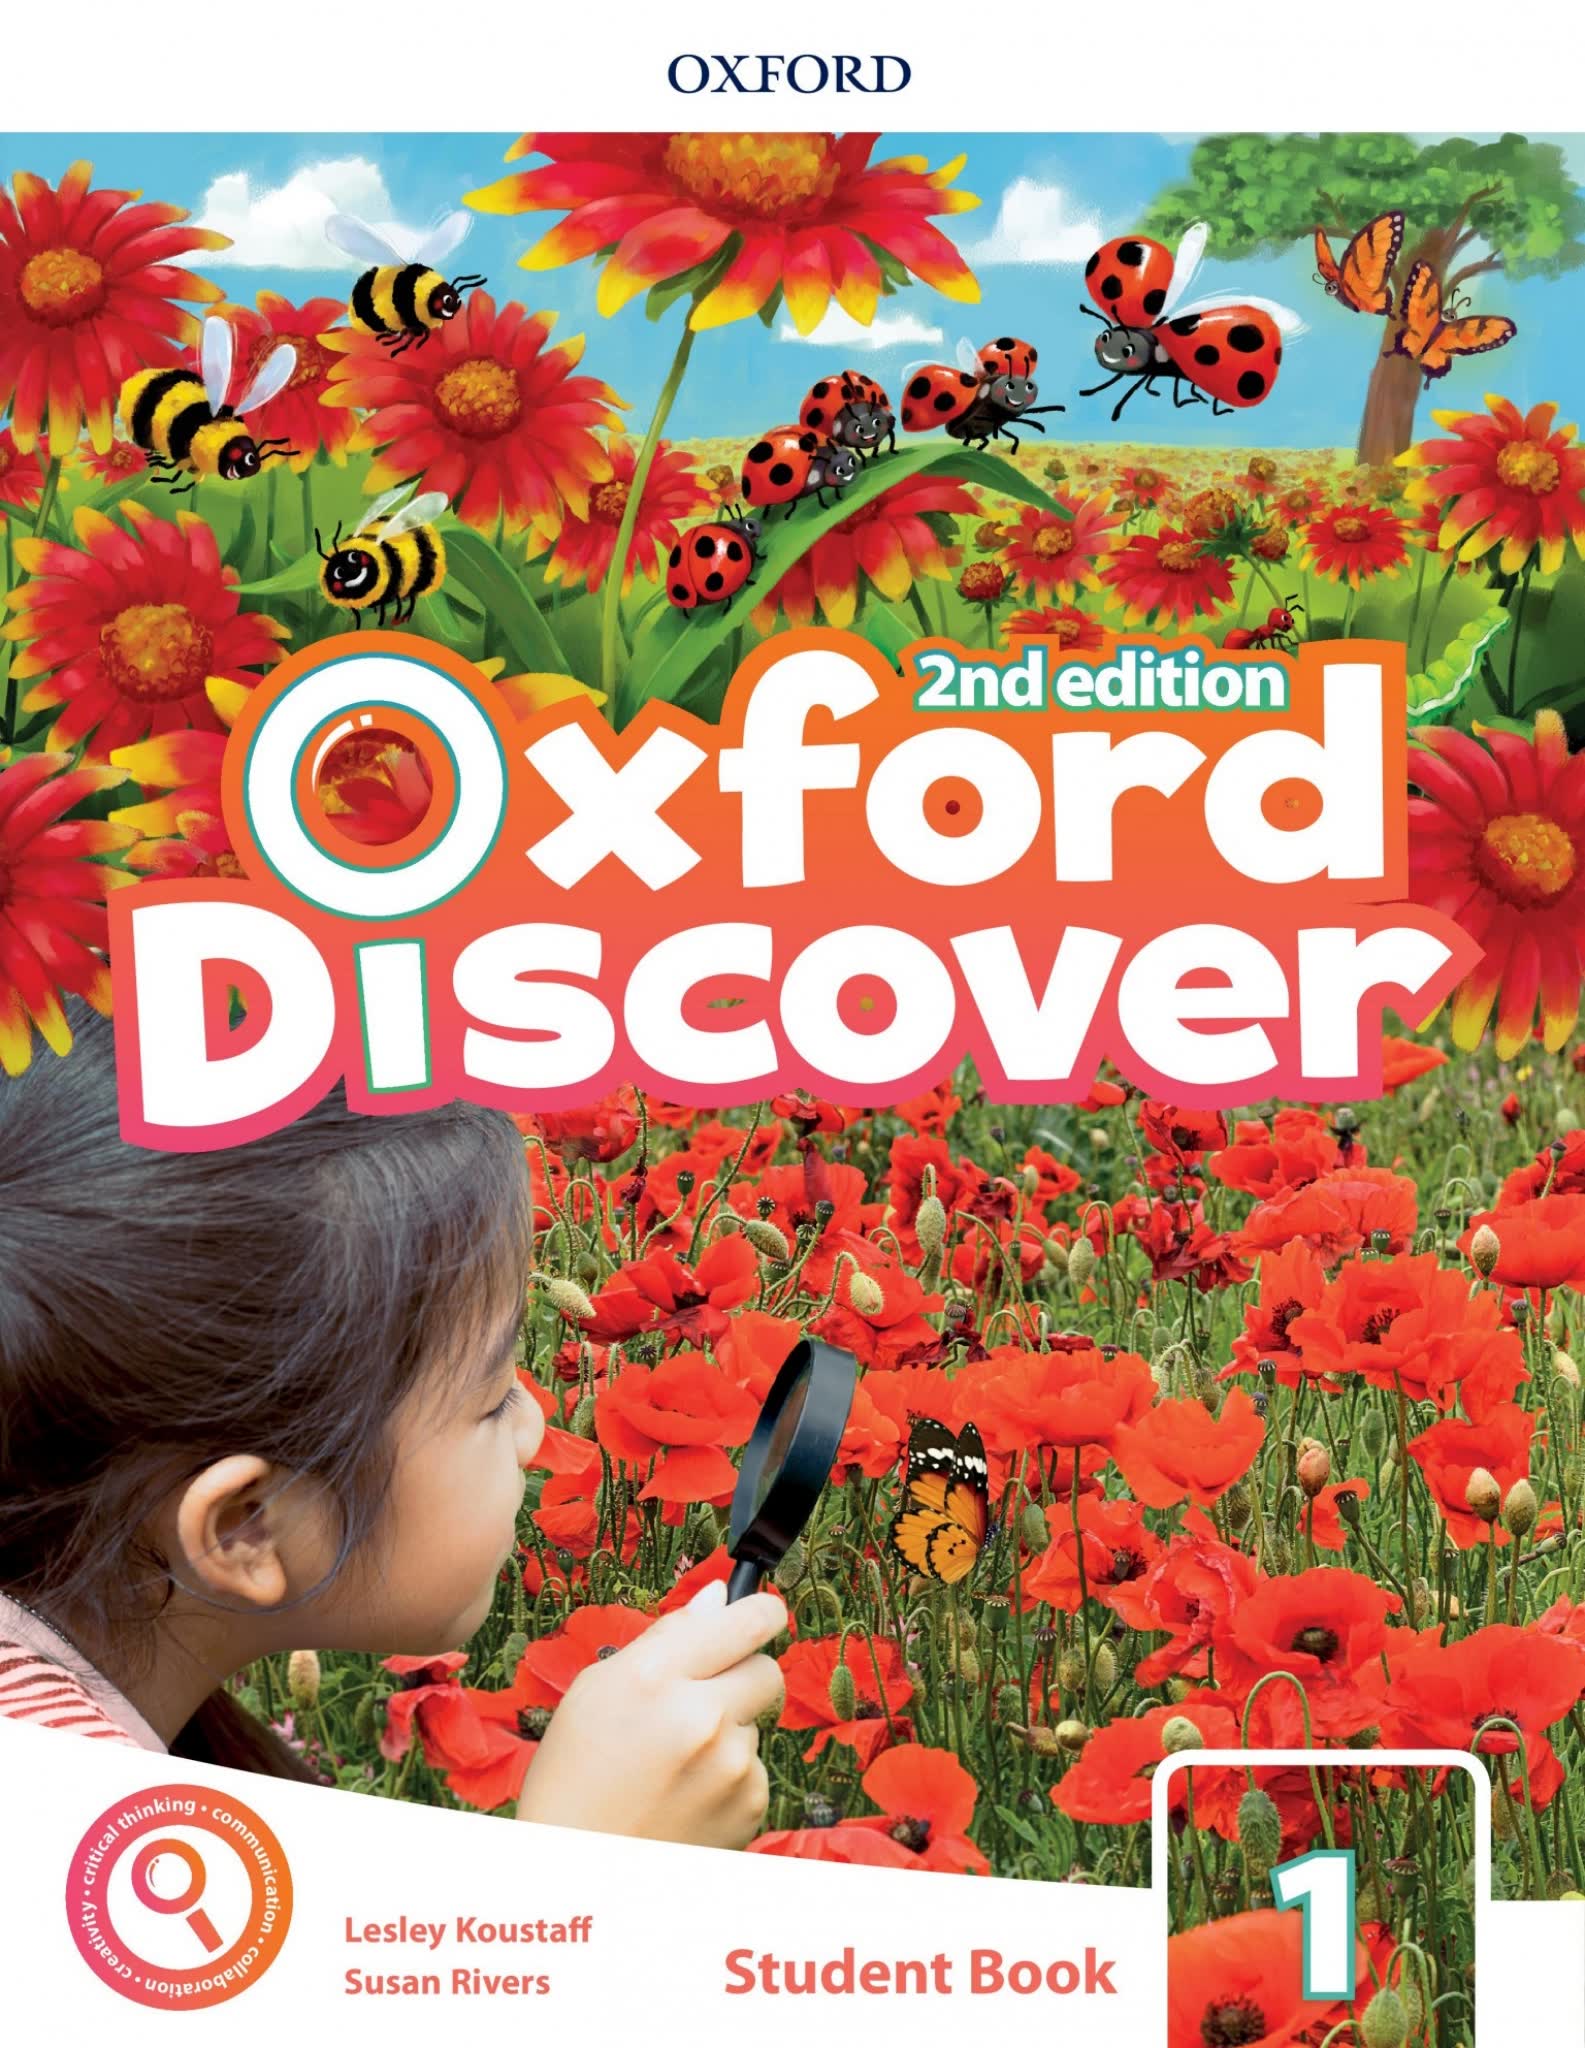 《Oxford-Discover》探索发现第二版